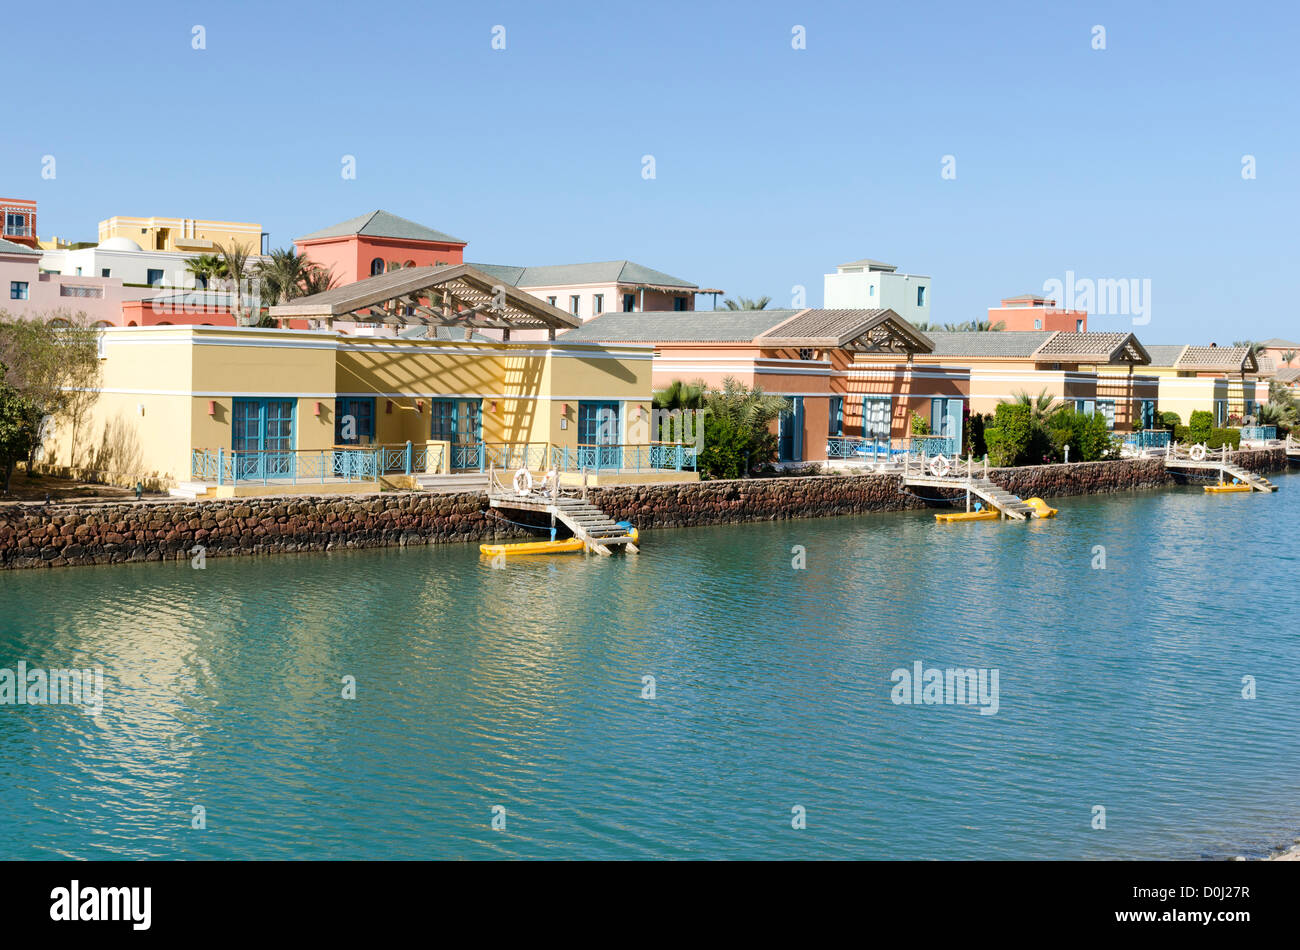 [El Gouna] [mar rosso] villa bungalow barca catamarano Foto Stock